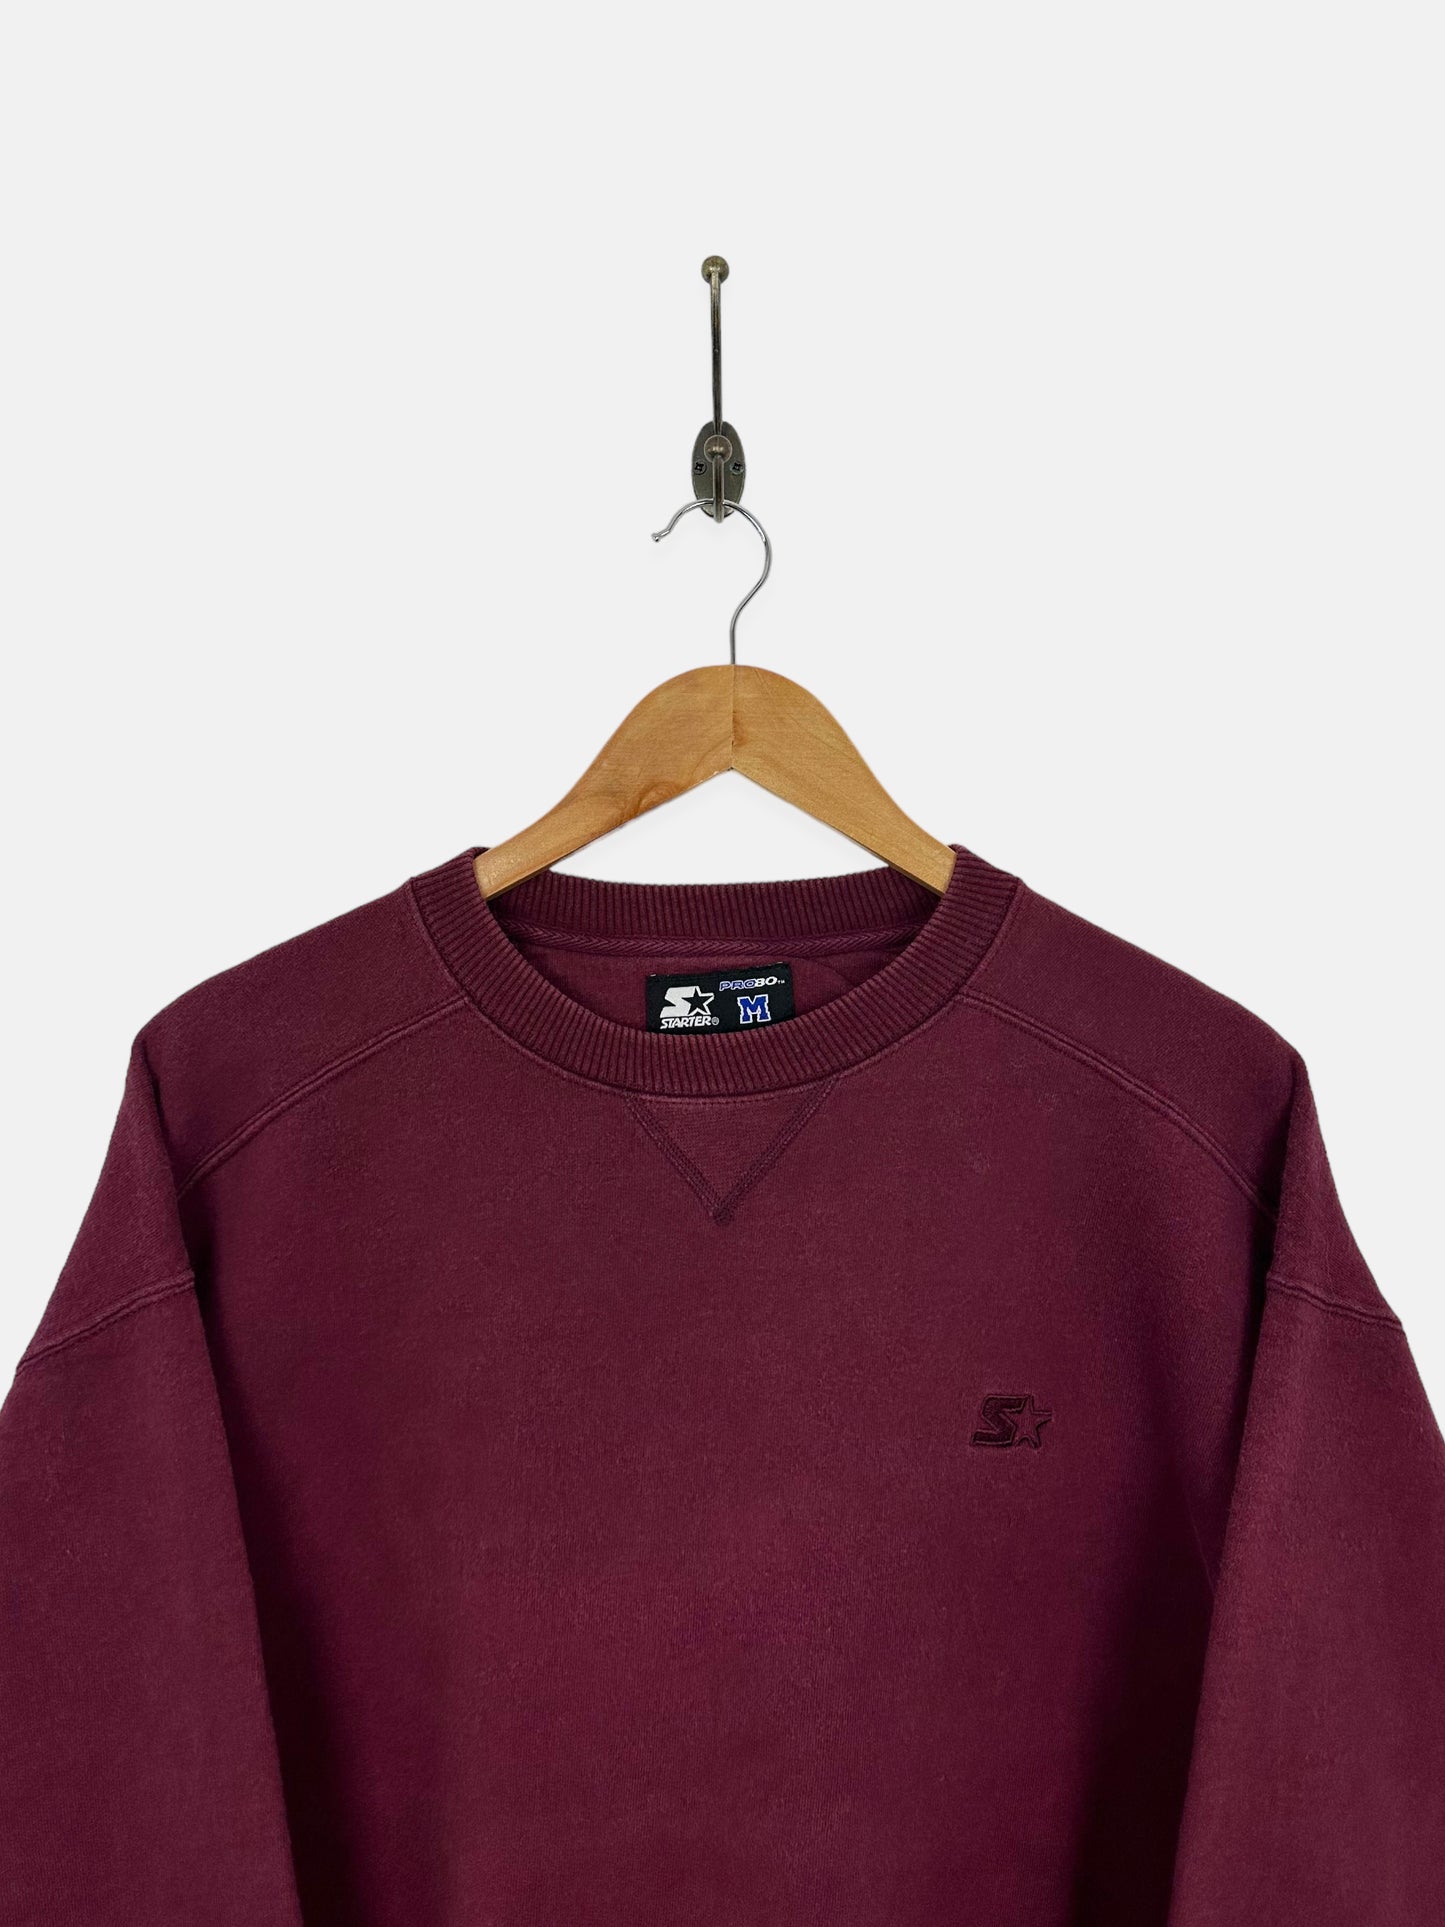 90's Starter Embroidered Vintage Sweatshirt Size 12-14